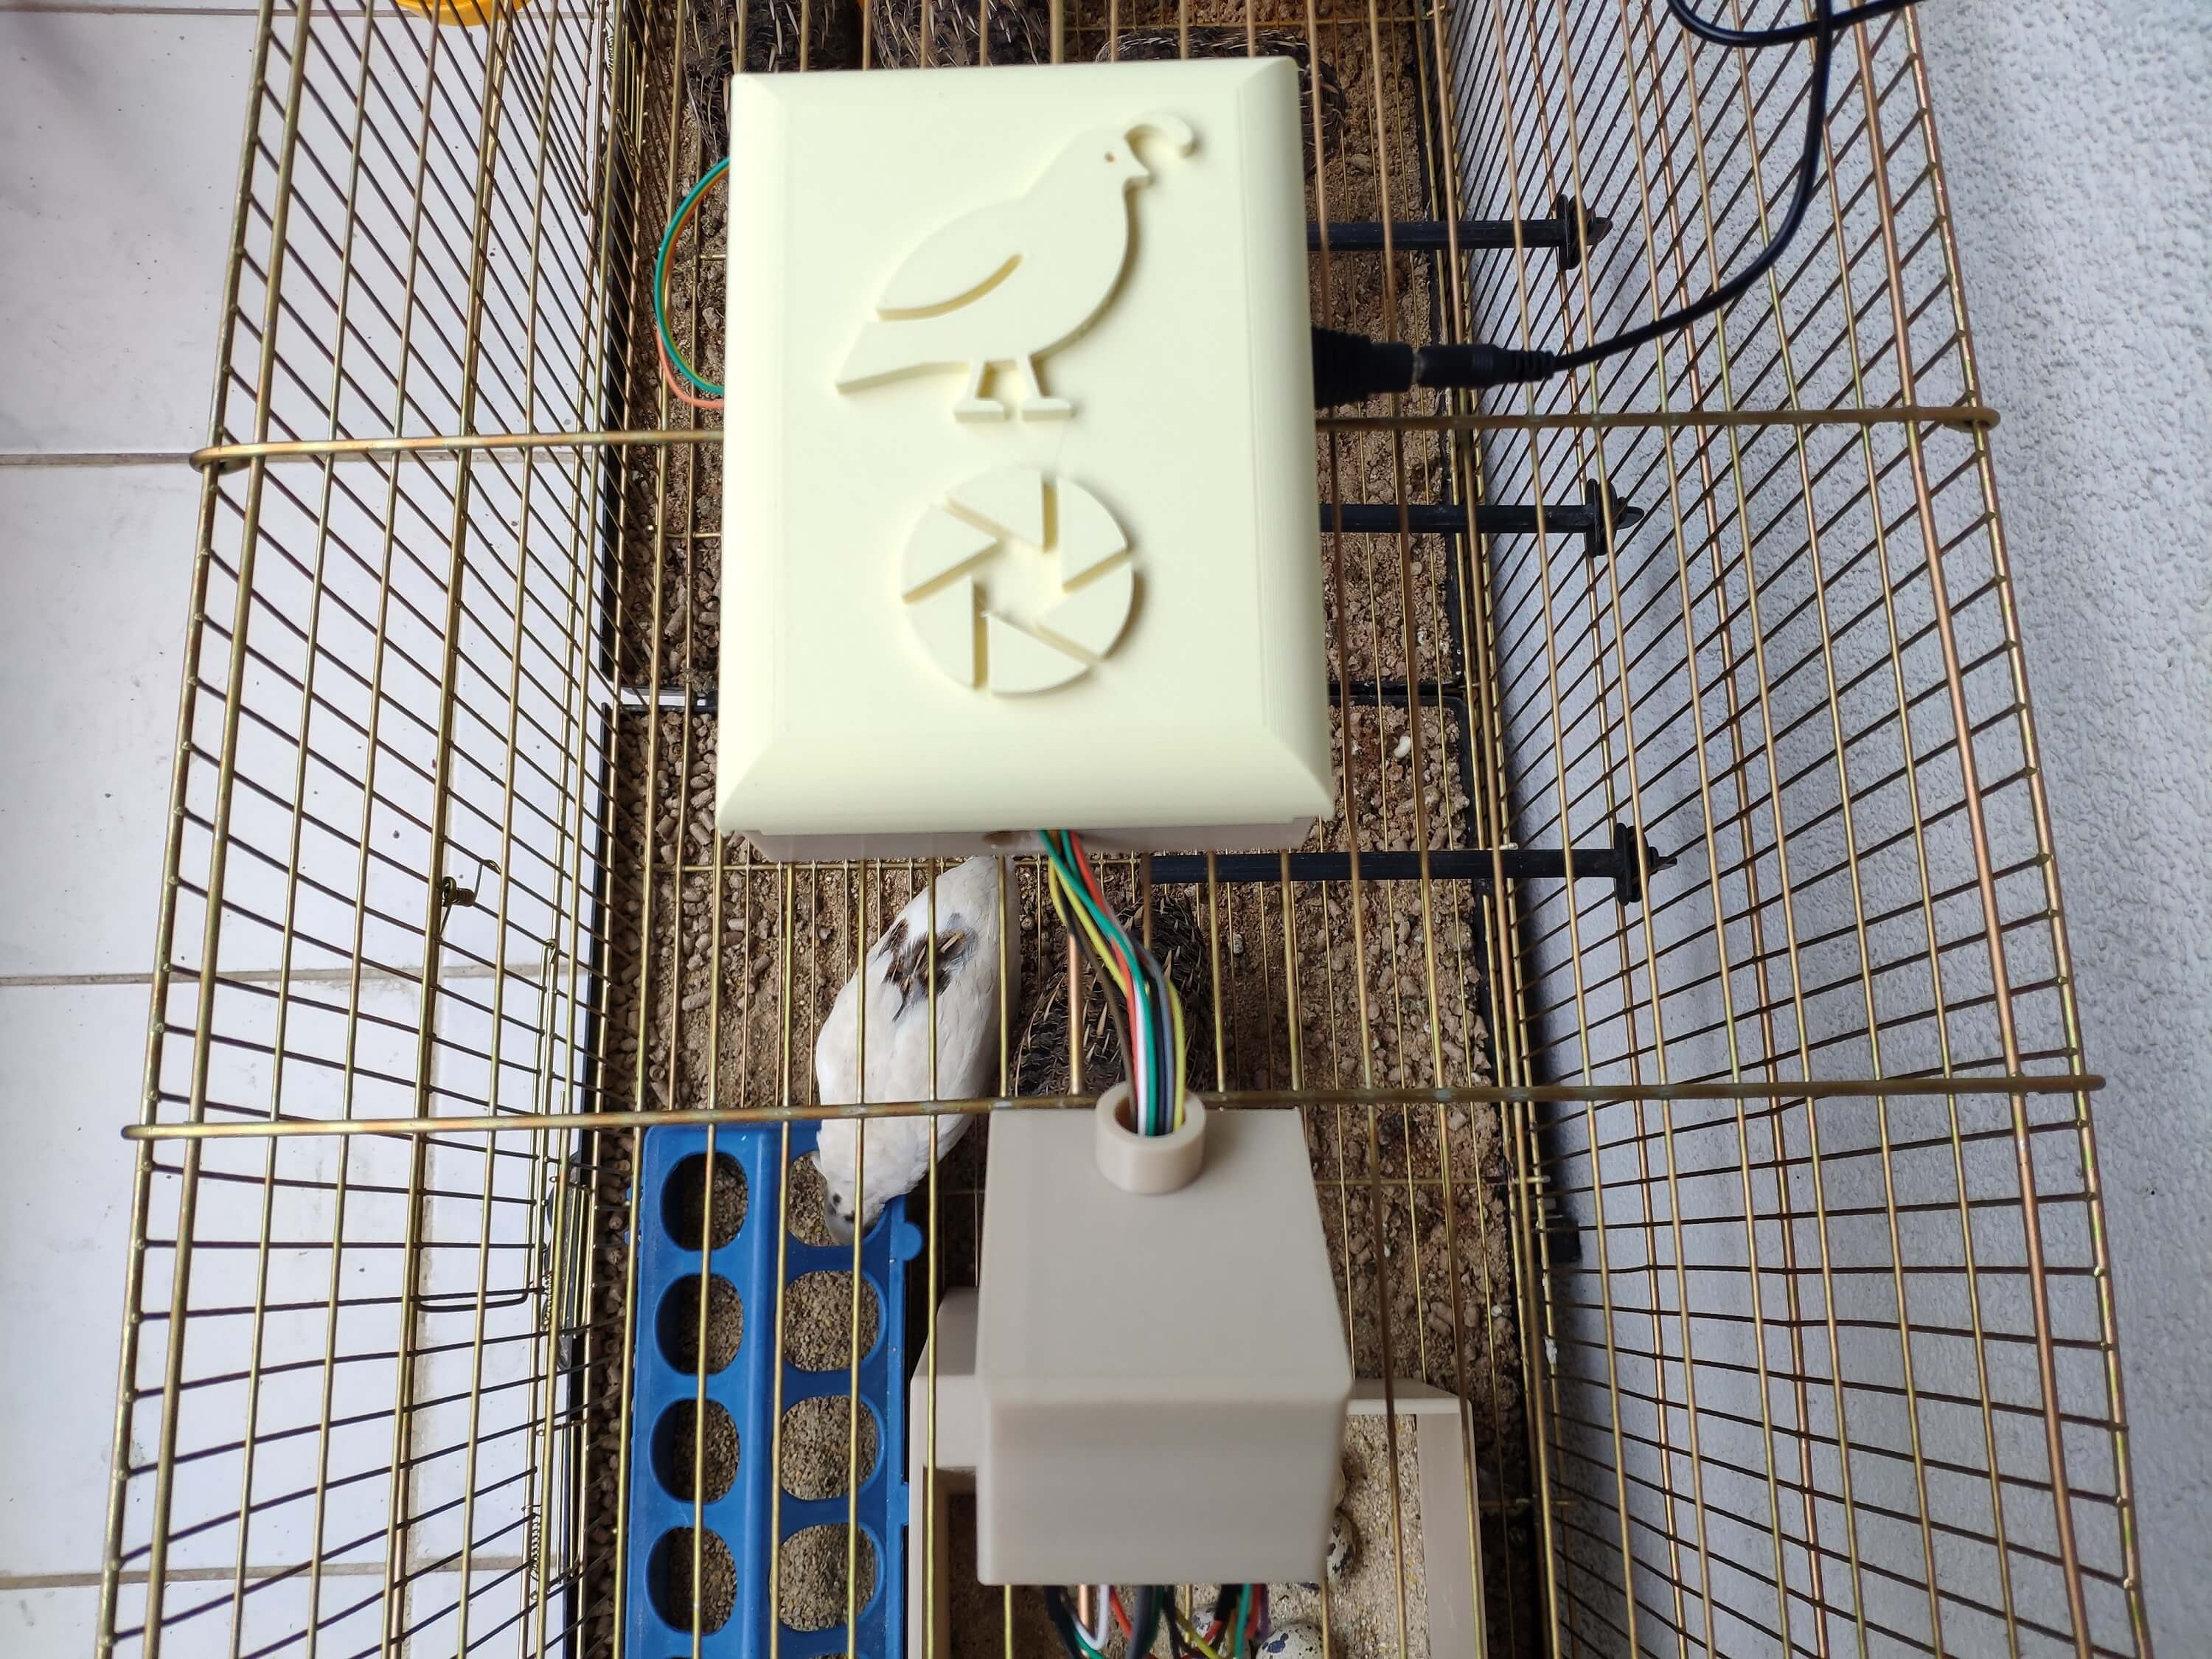 LattePanda windows 10 SBC IoT AI-driven Poultry Feeder and Egg Tracker